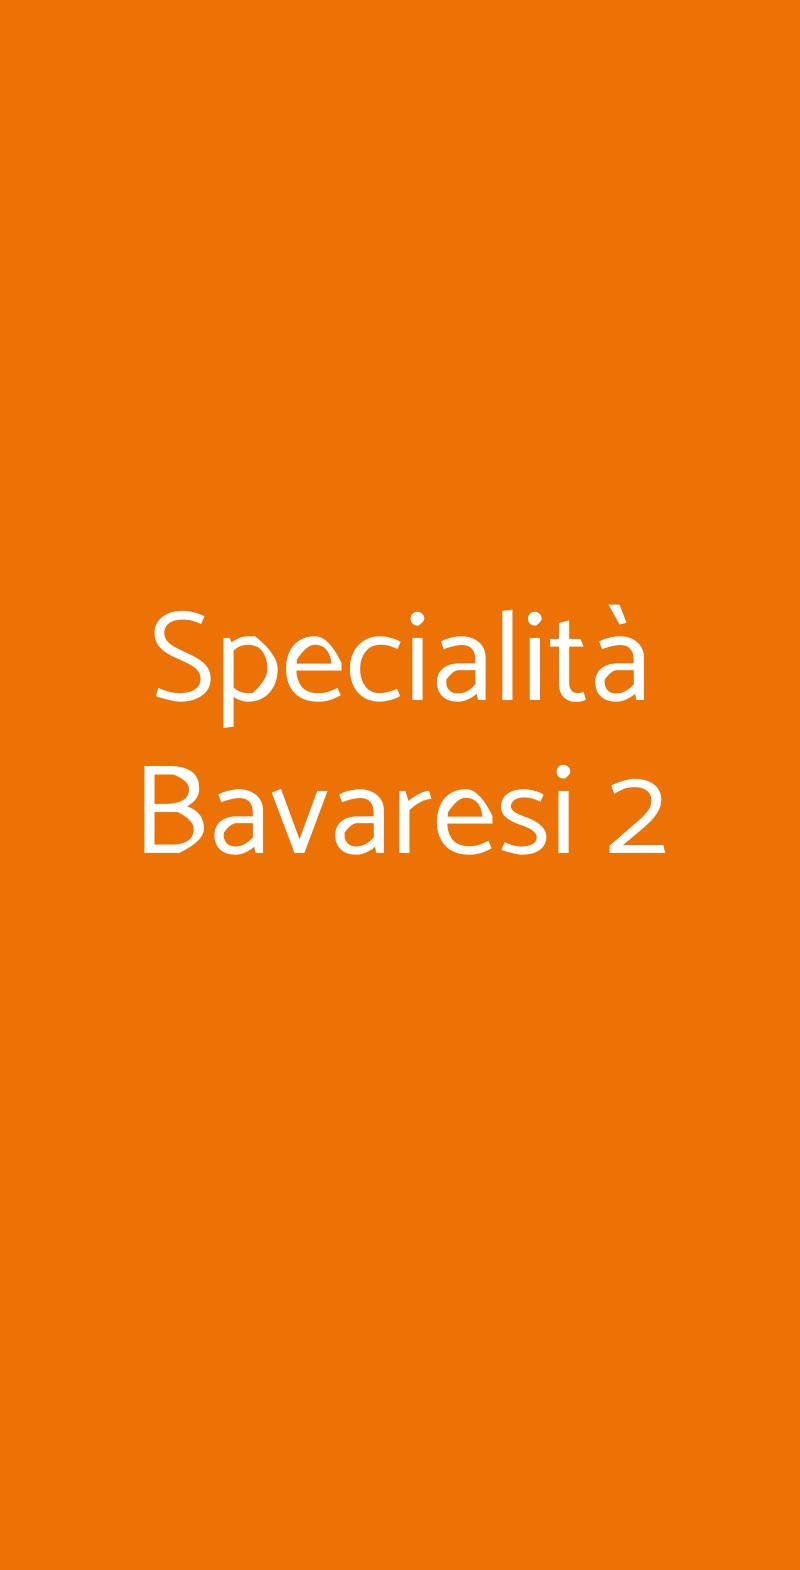 Specialità Bavaresi 2 Salerno menù 1 pagina